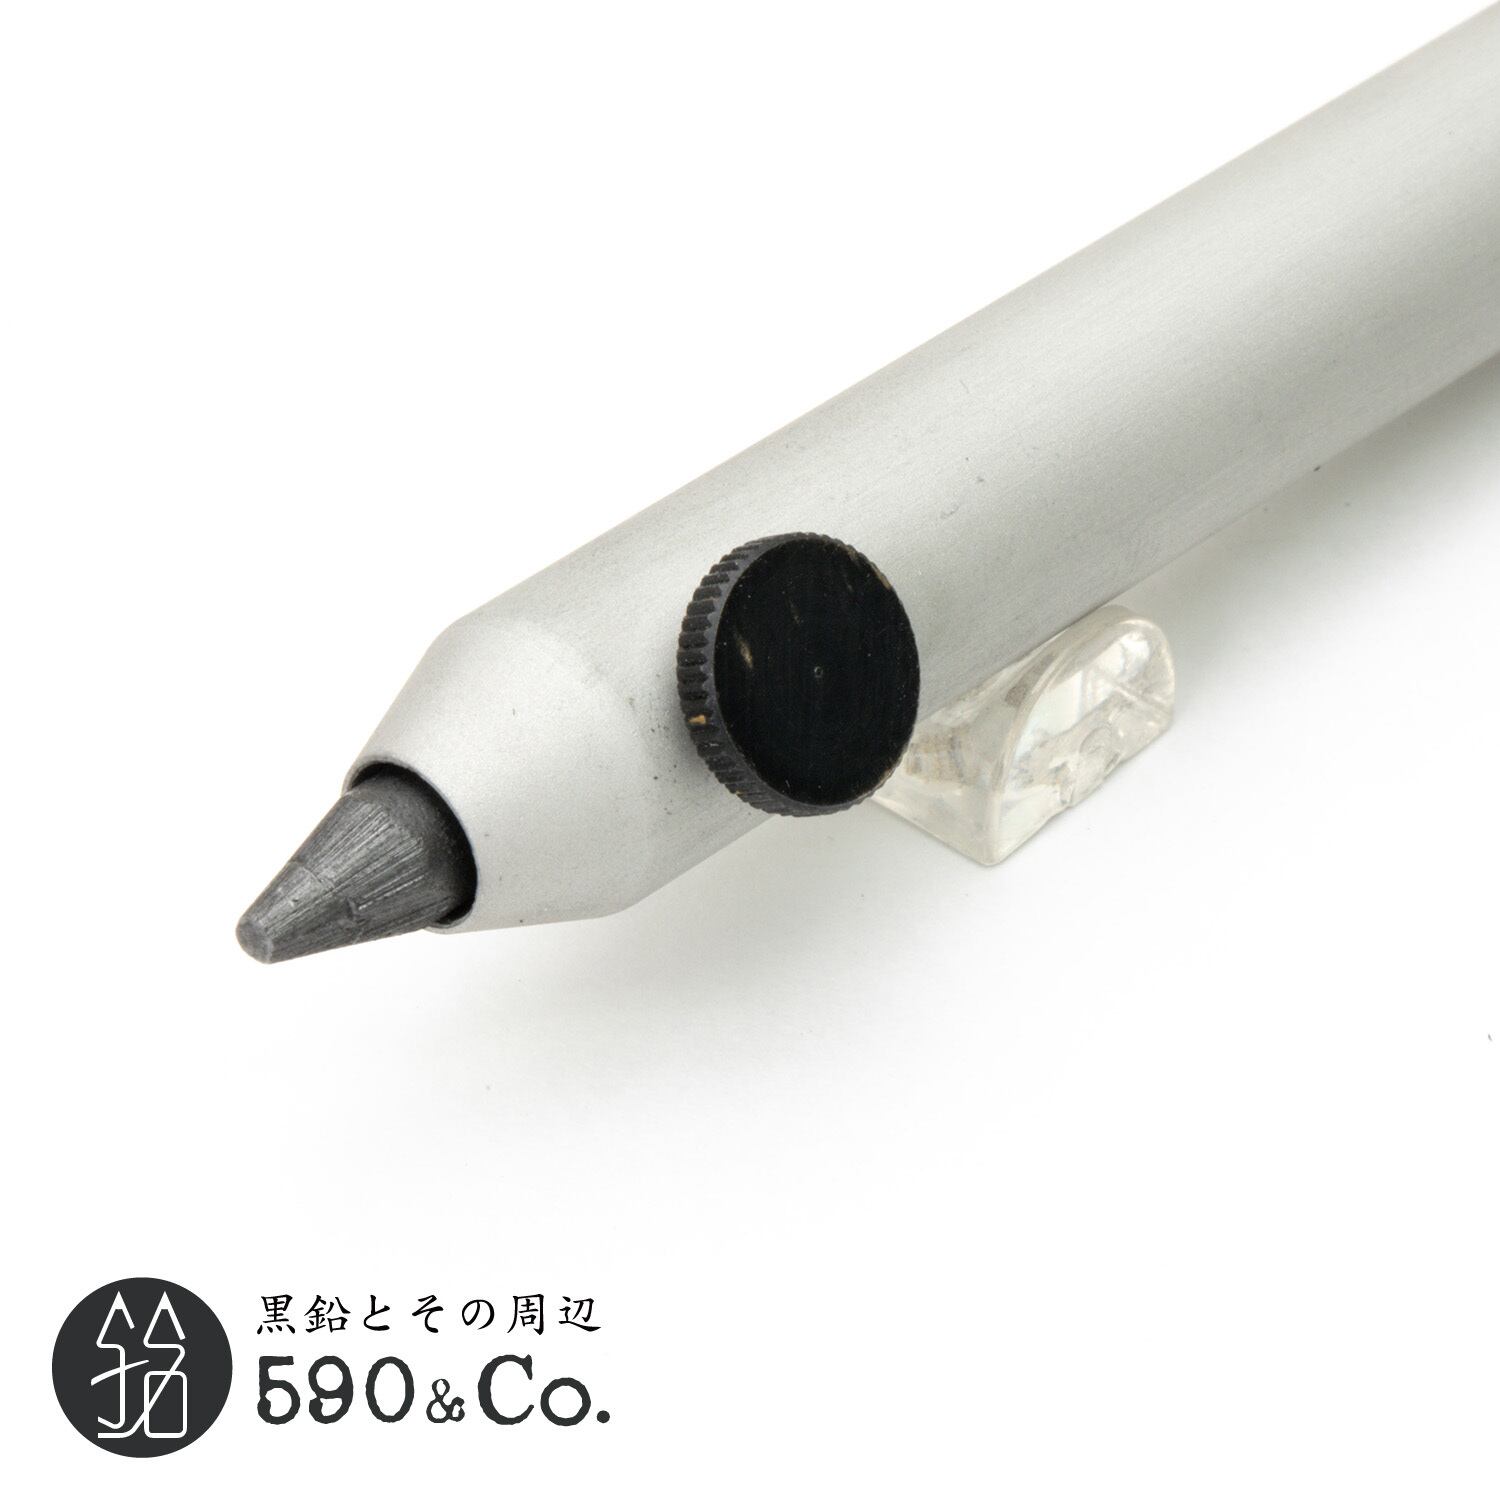 【PARAFERNALIA × Internoitaliano】 Neri Mechanical Pencil 5.5ミリ芯ホルダー (アルミ)  590Co.